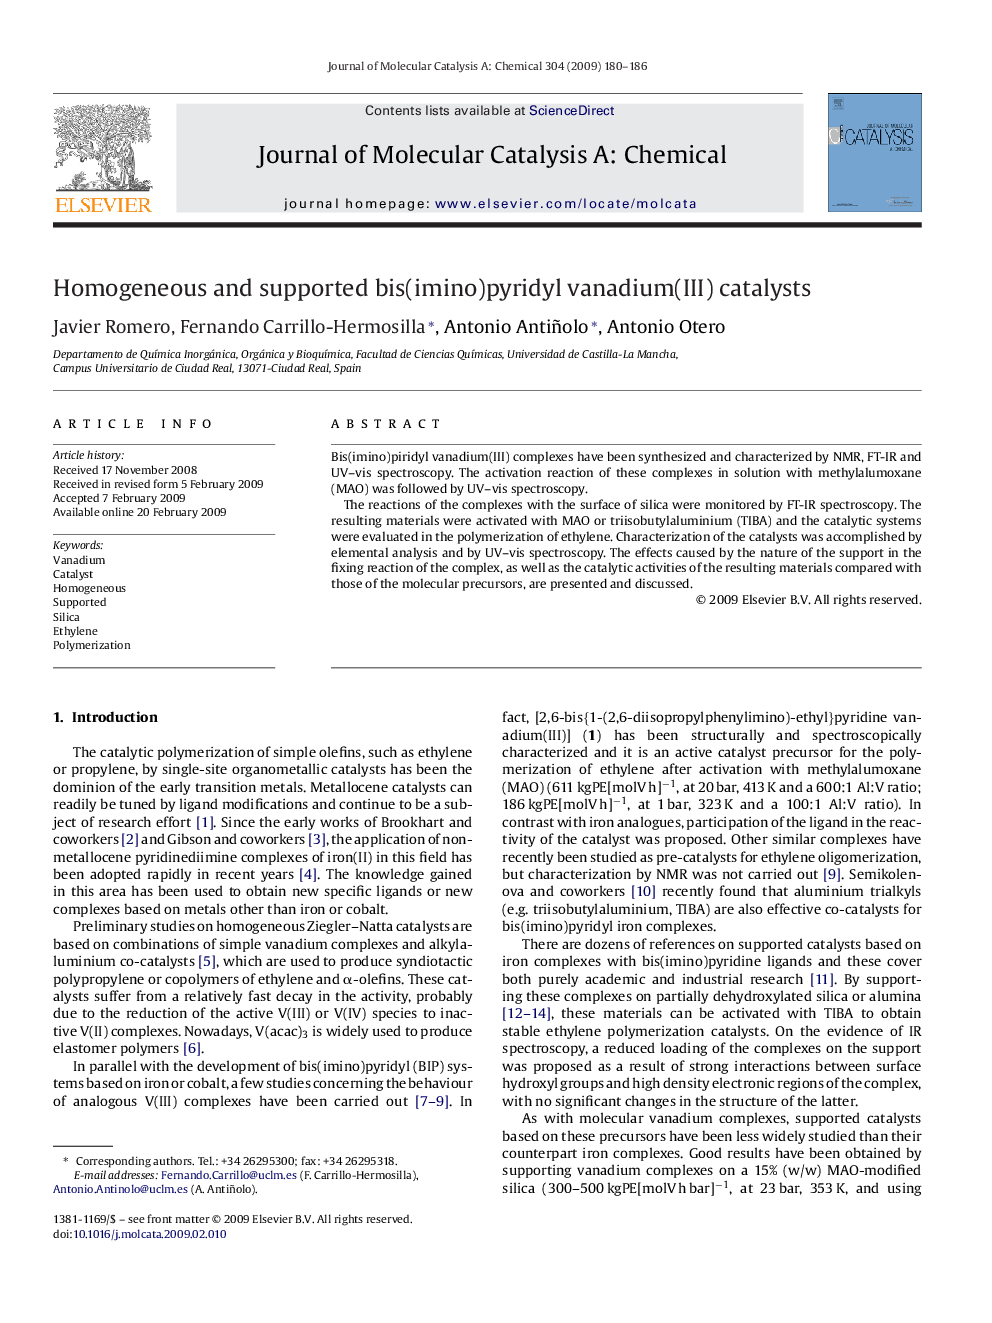 Homogeneous and supported bis(imino)pyridyl vanadium(III) catalysts